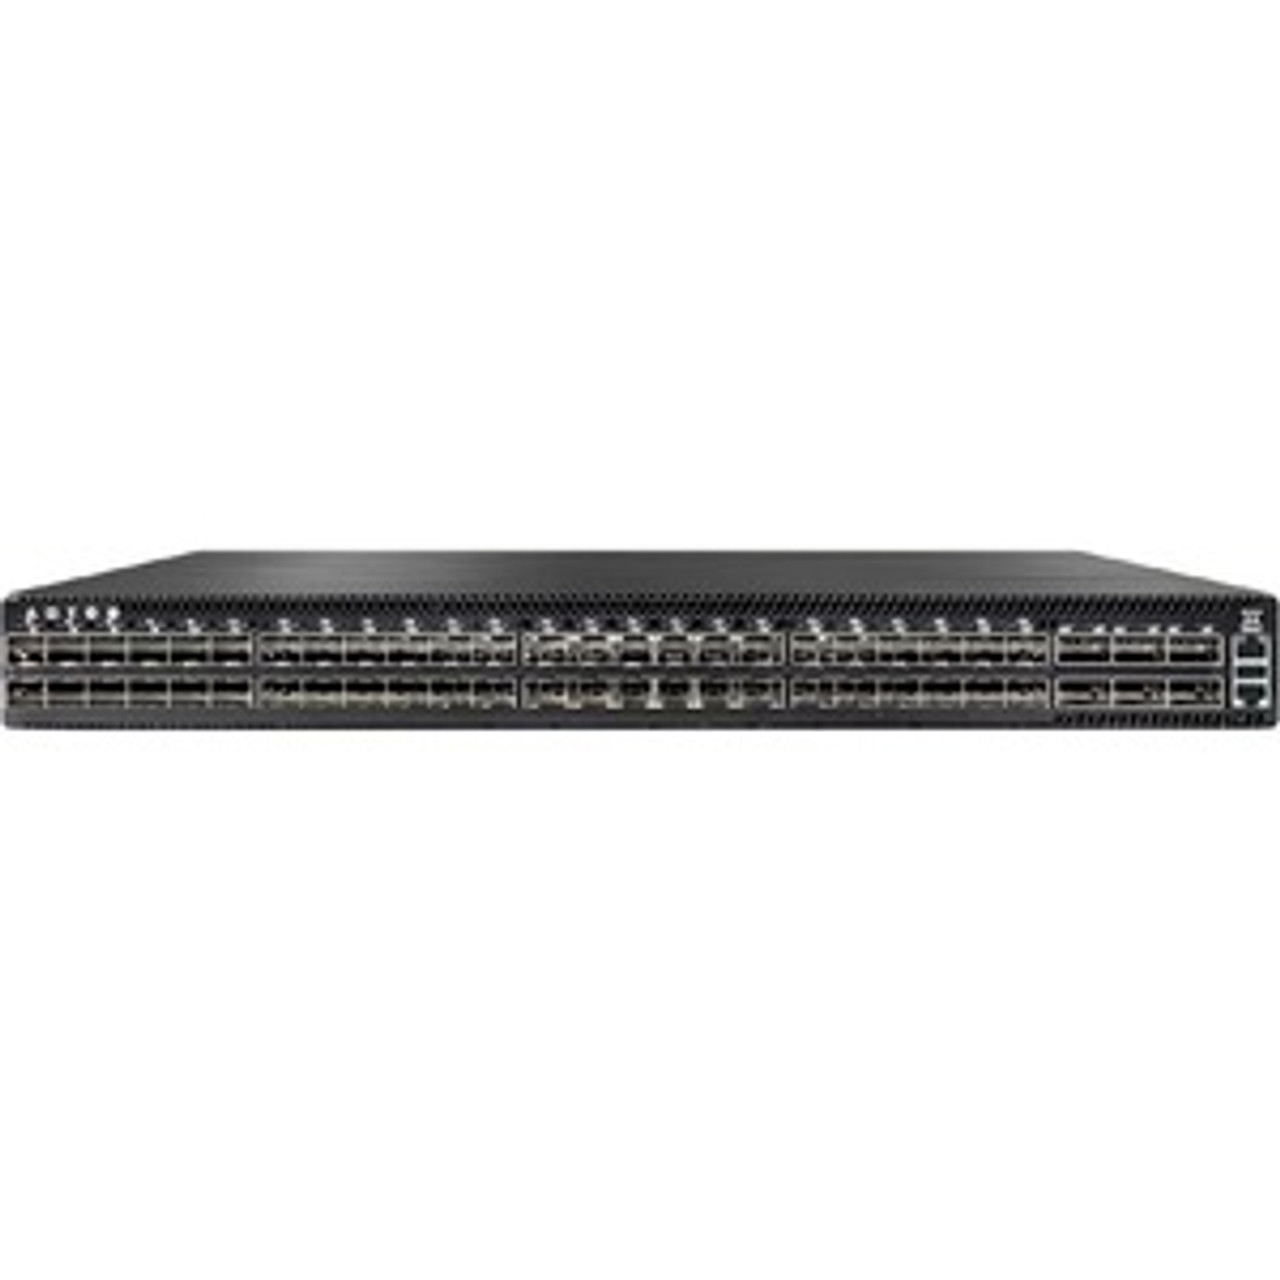 MSN3700-CS2R NVIDIA Spectrum-2 Based 100GbE 1U Open Ethernet Switch with Onyx 32 QSFP28 Ports 2 Power Supplies (AC) Standard Depth x86 CPU C2P Airflow